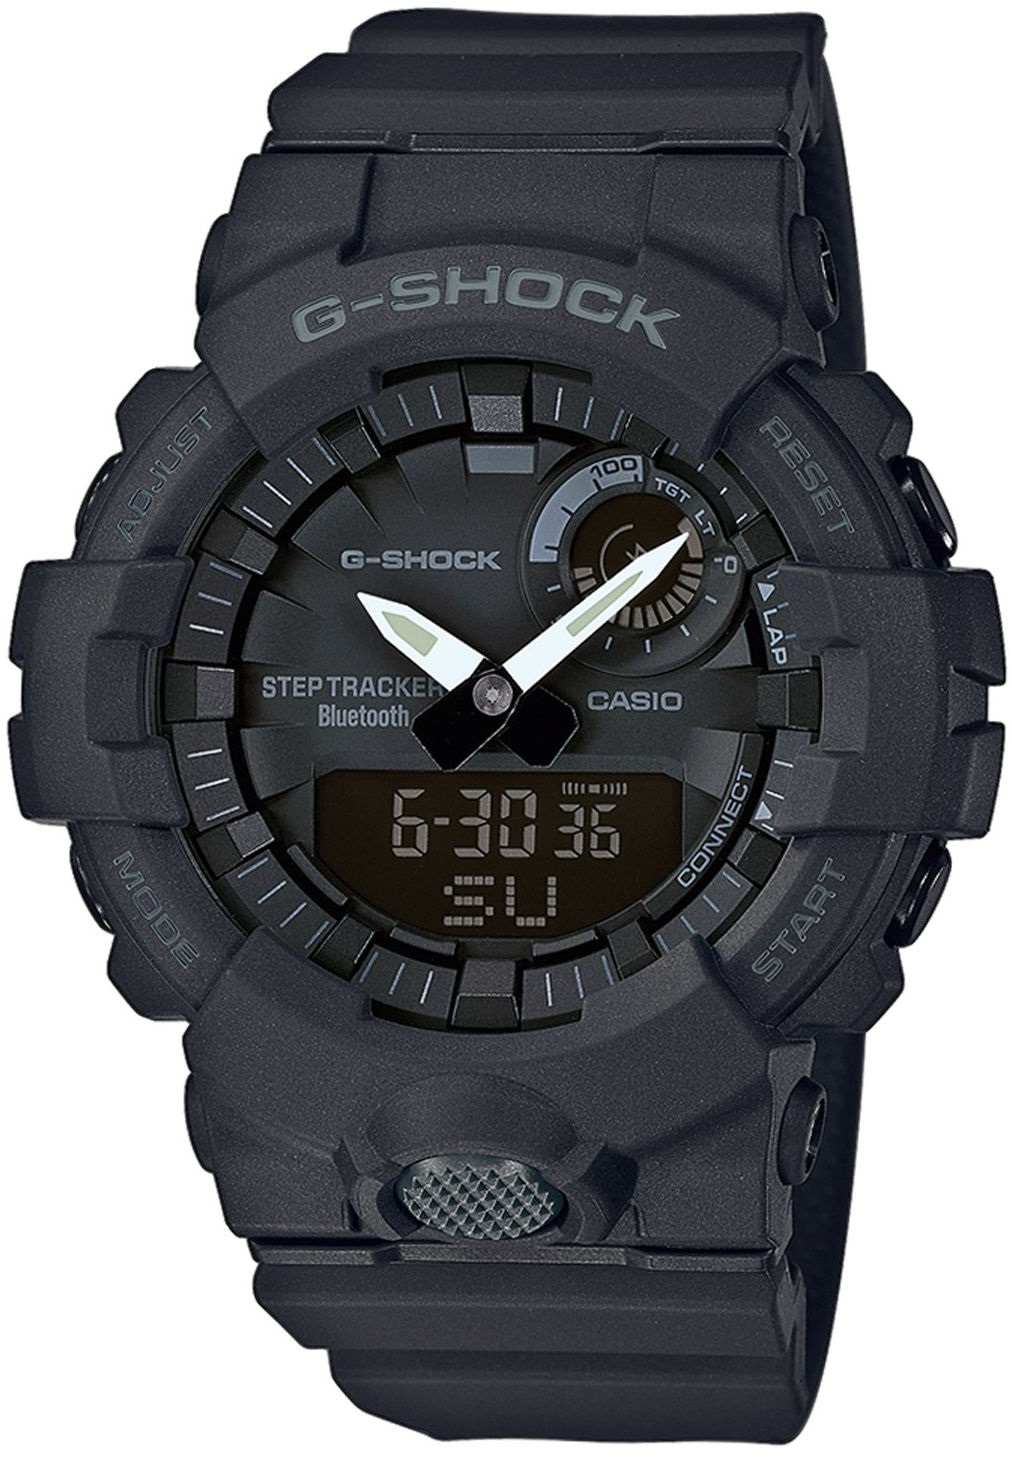 Мужские часы Casio G-Shock GBA-800-1AER